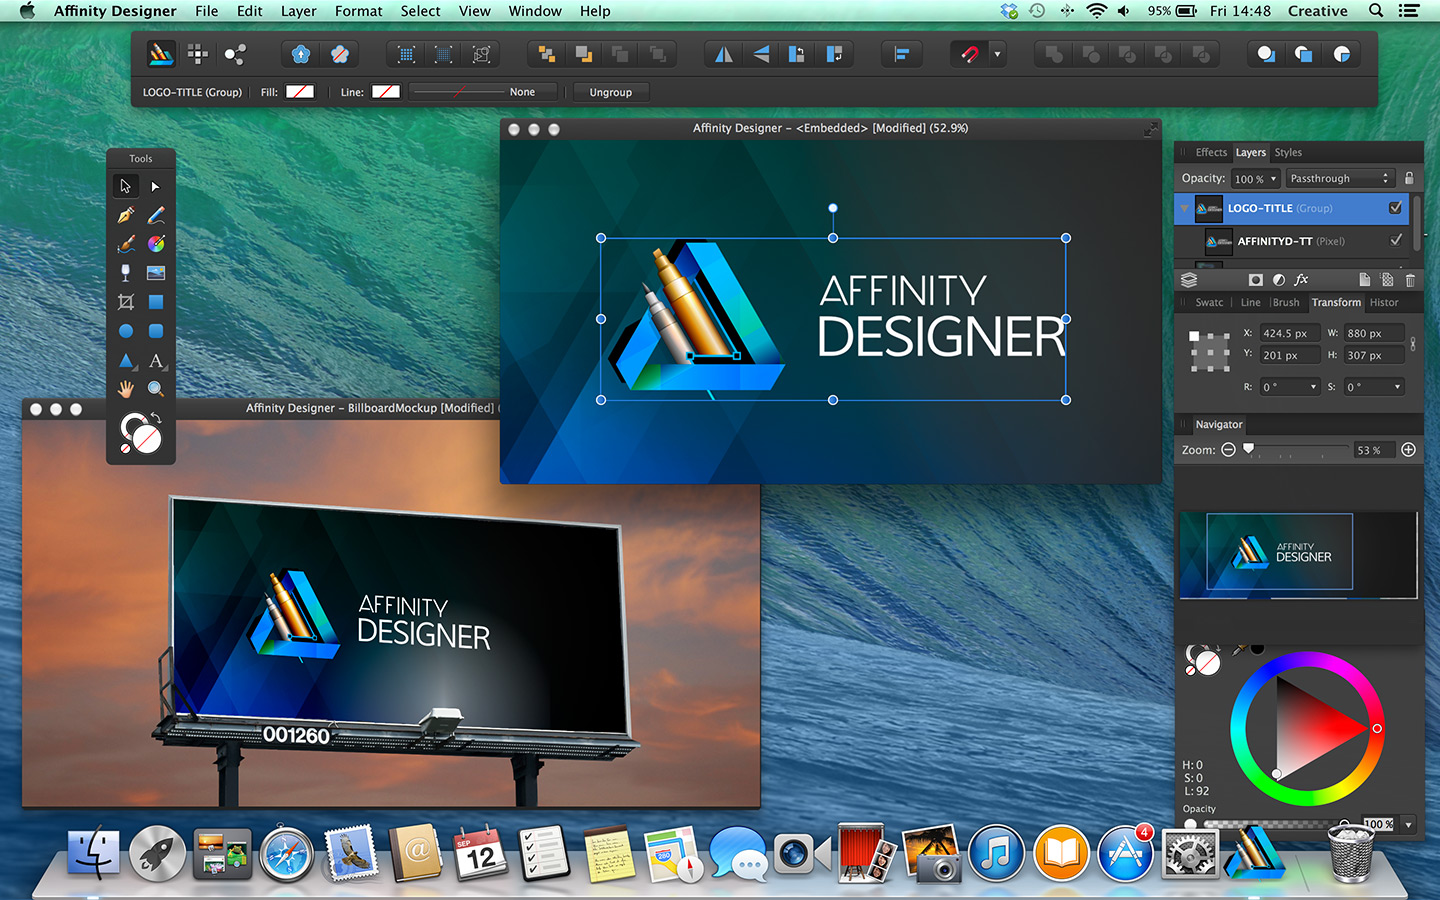 affinity designer windows 7